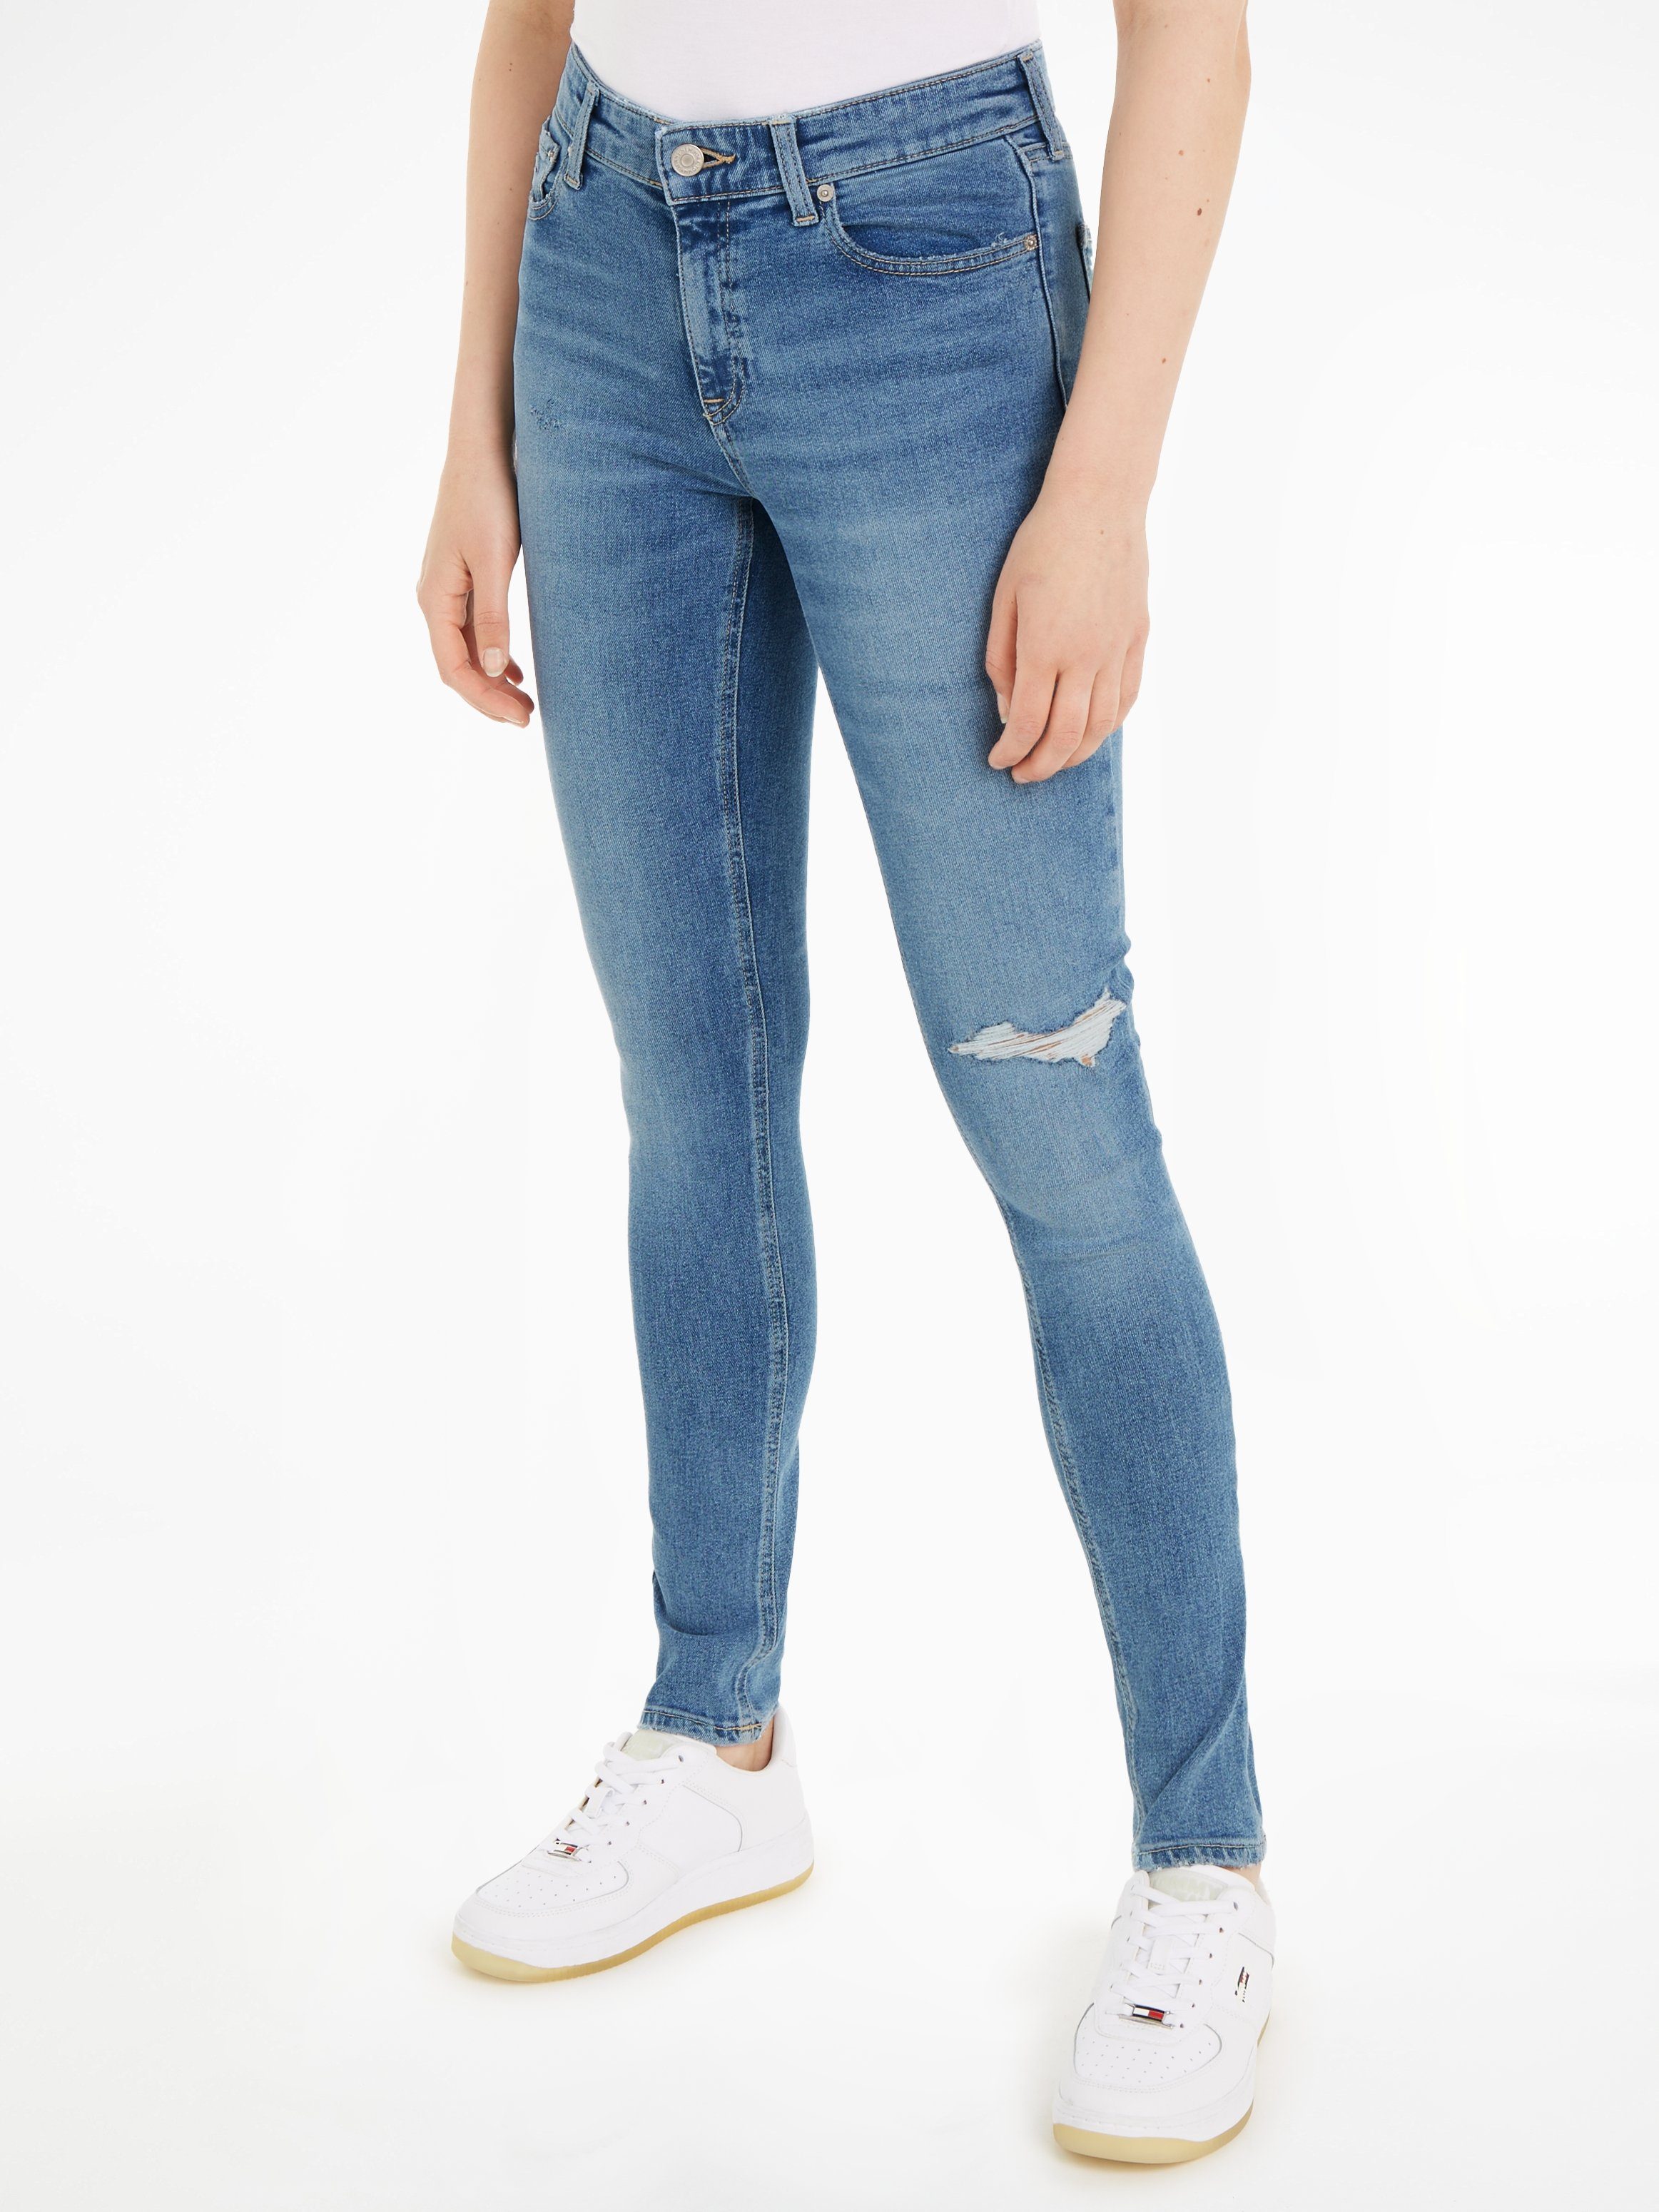 Nora mit Skinny-fit-Jeans light Markenlabel Jeans & Tommy Tommy denim3 Jeans Badge